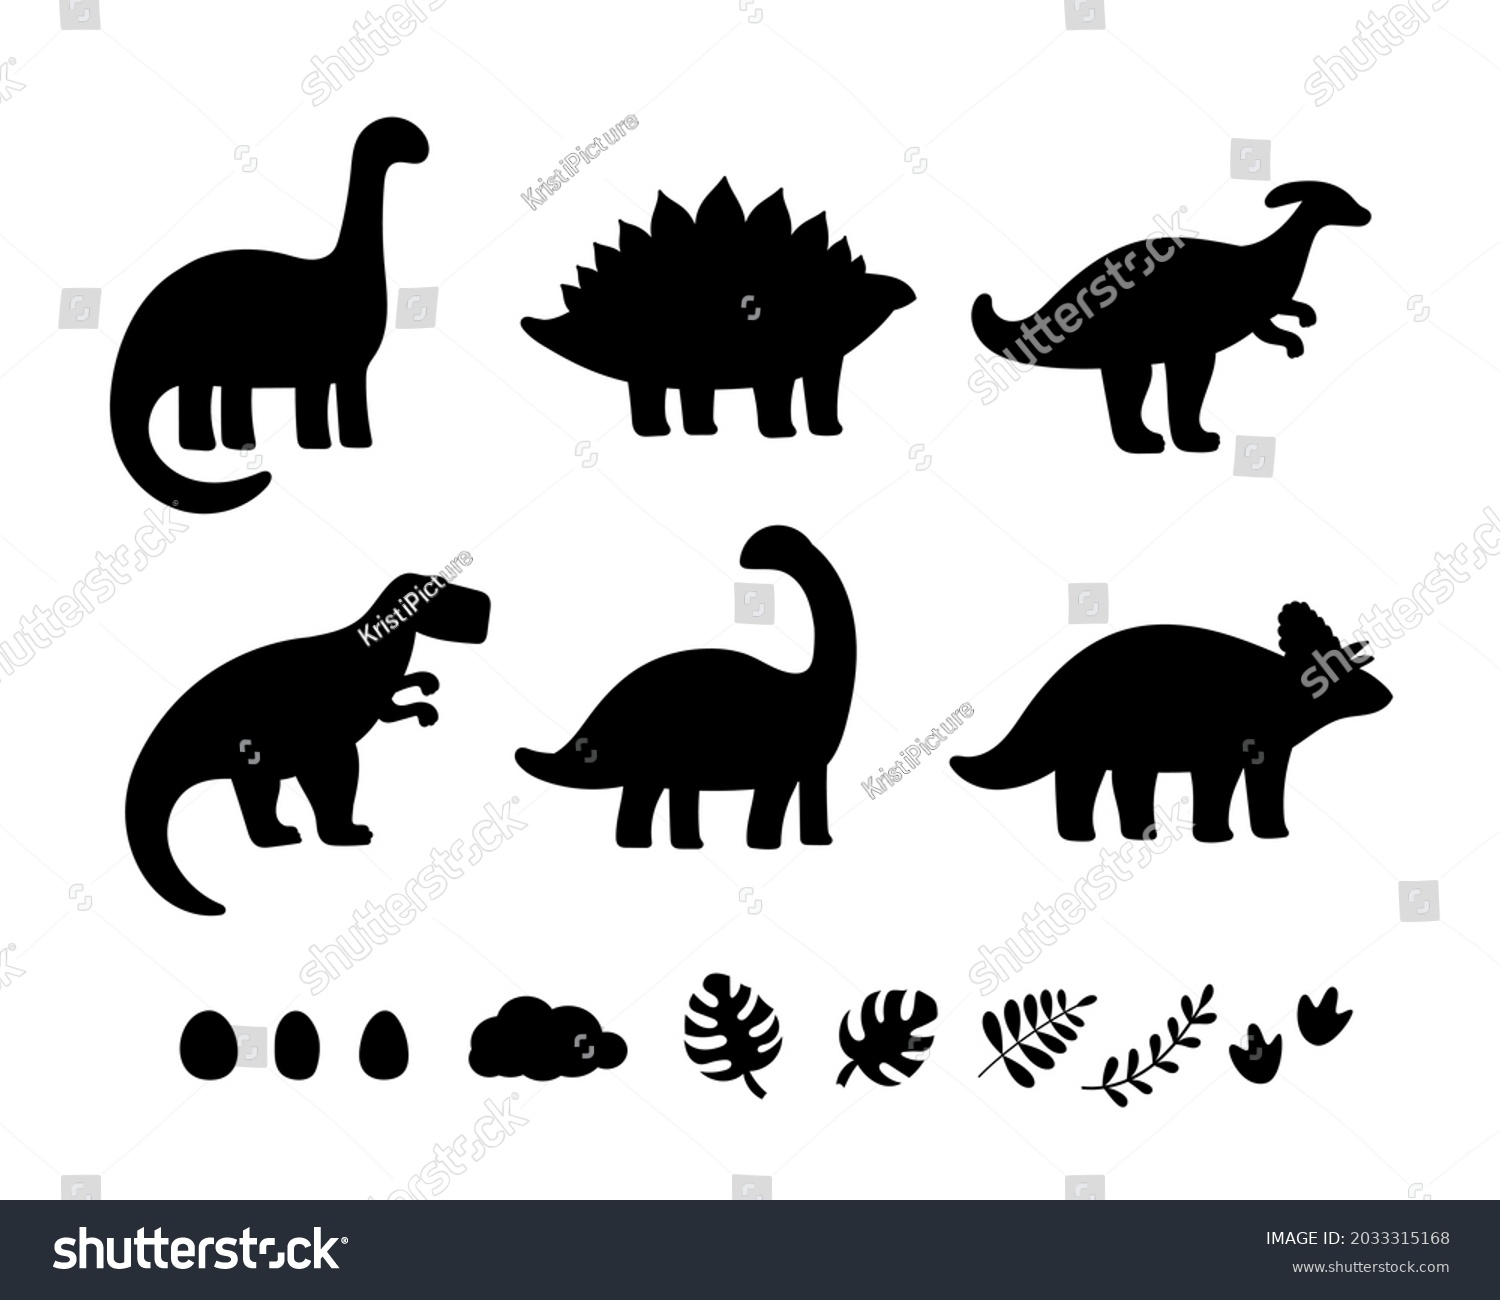 SVG of black dinosaur silhouettes for kids svg